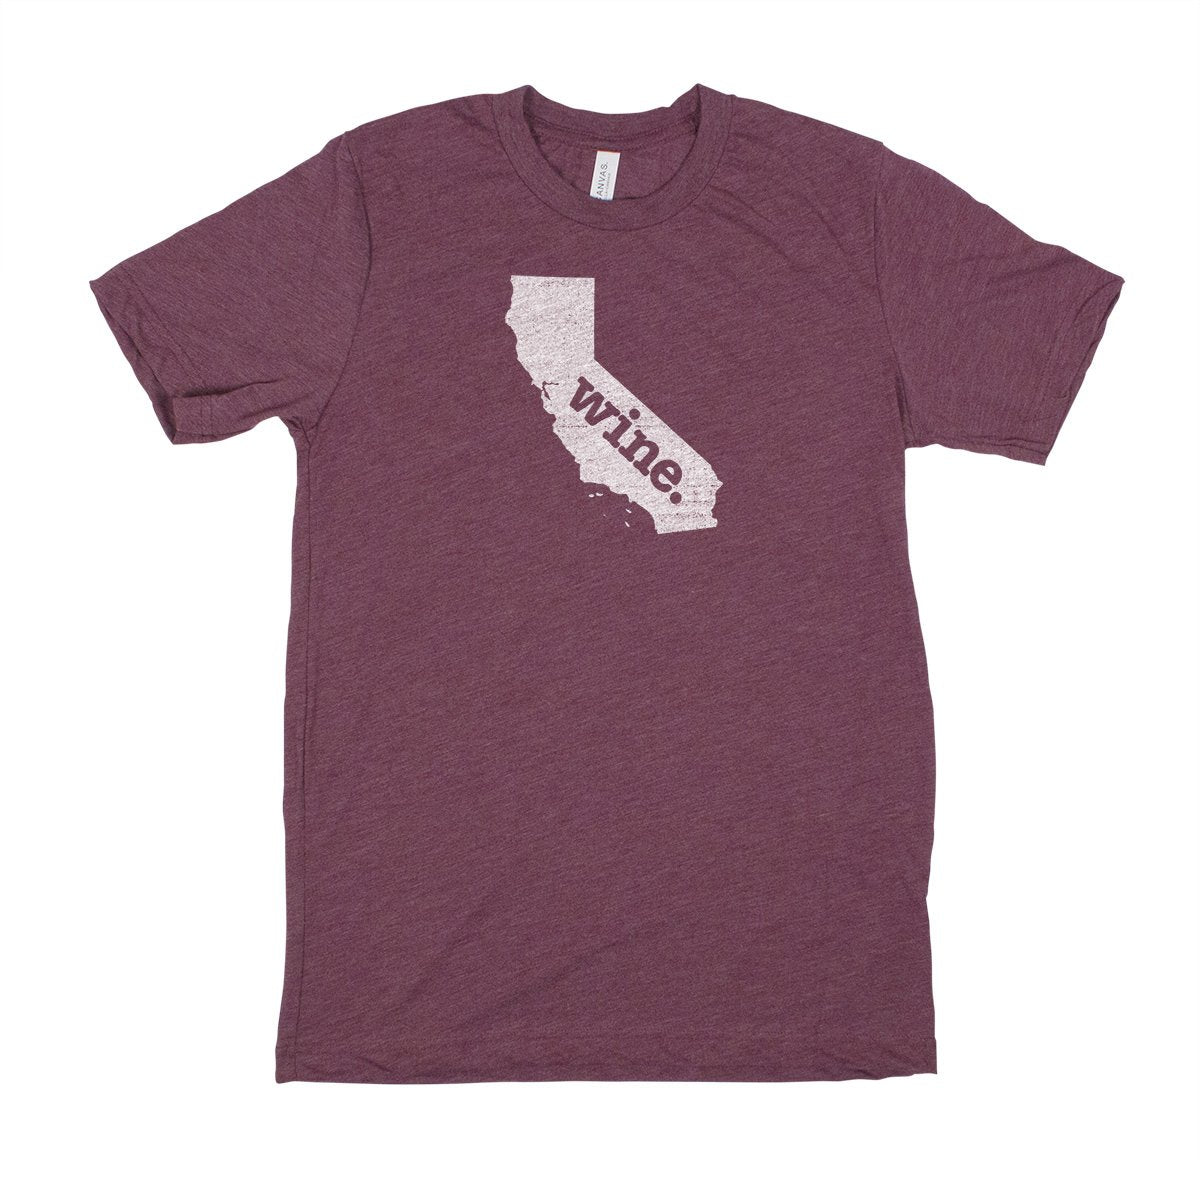 bike. Men's Unisex T-Shirt - Utah